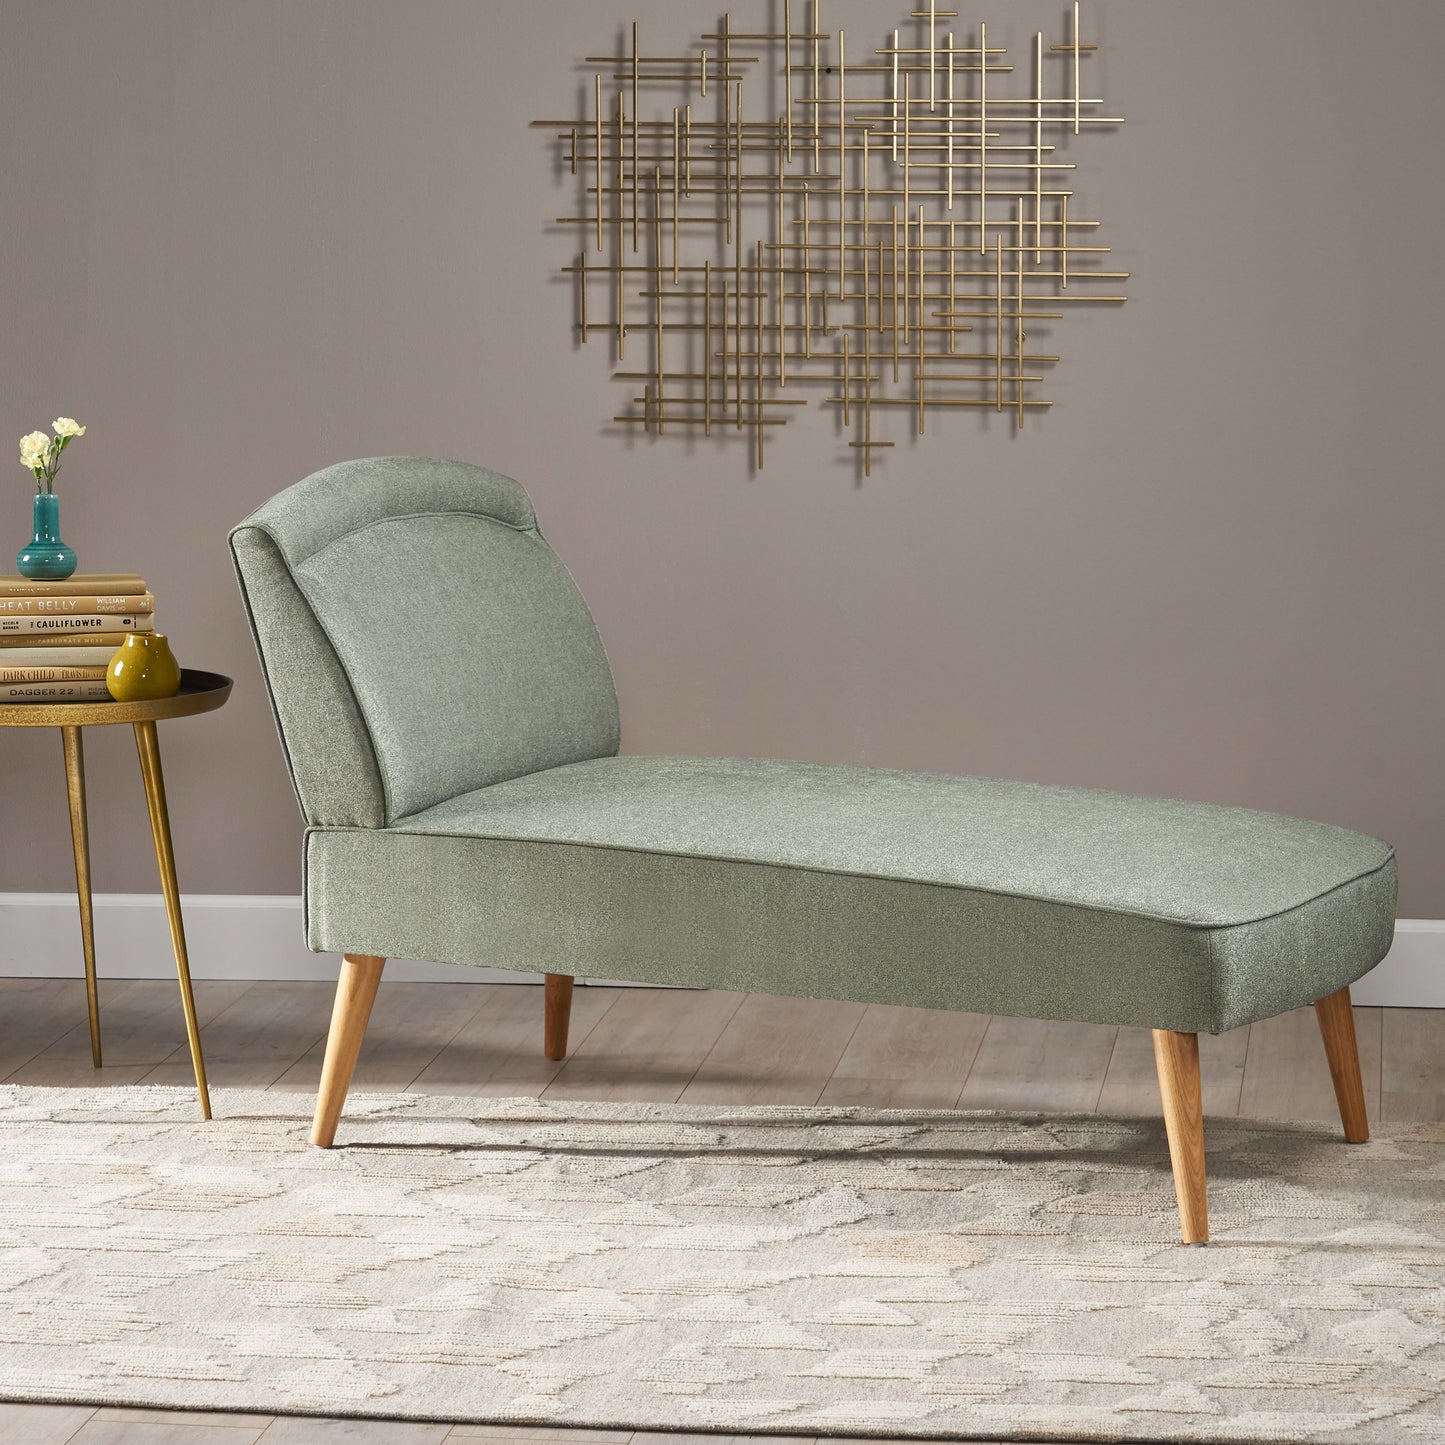 Jolie Mid Century Modern Fabric Chaise Lounge